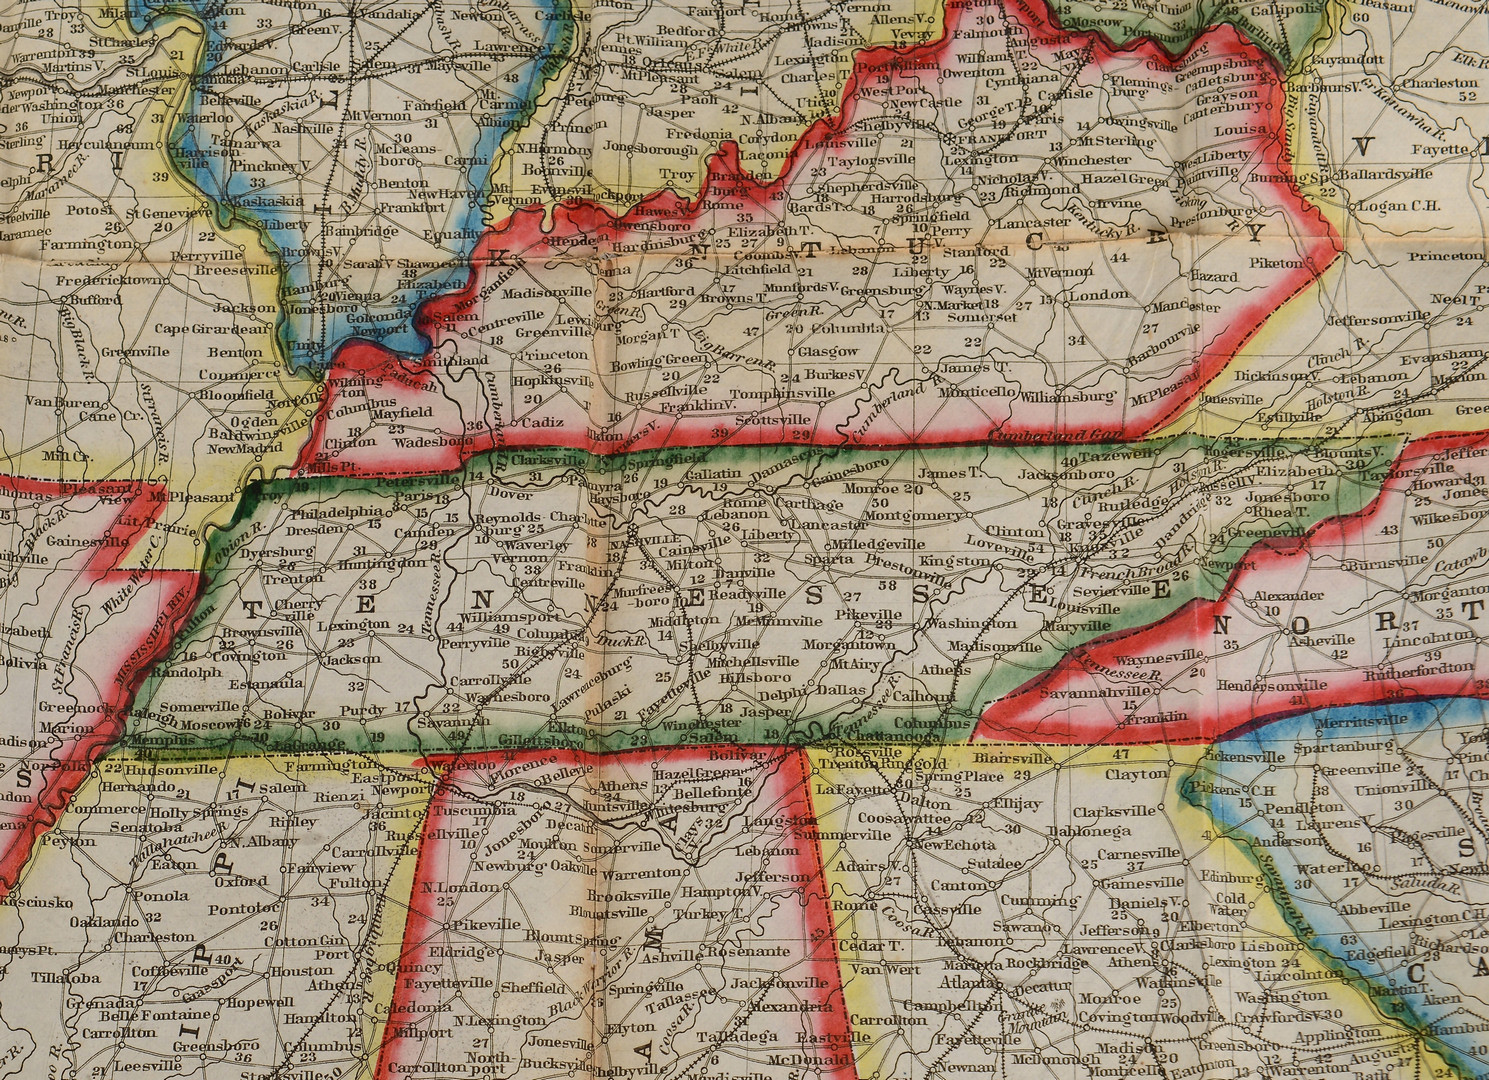 Lot 403: 1857 Phelps pocket map of United States